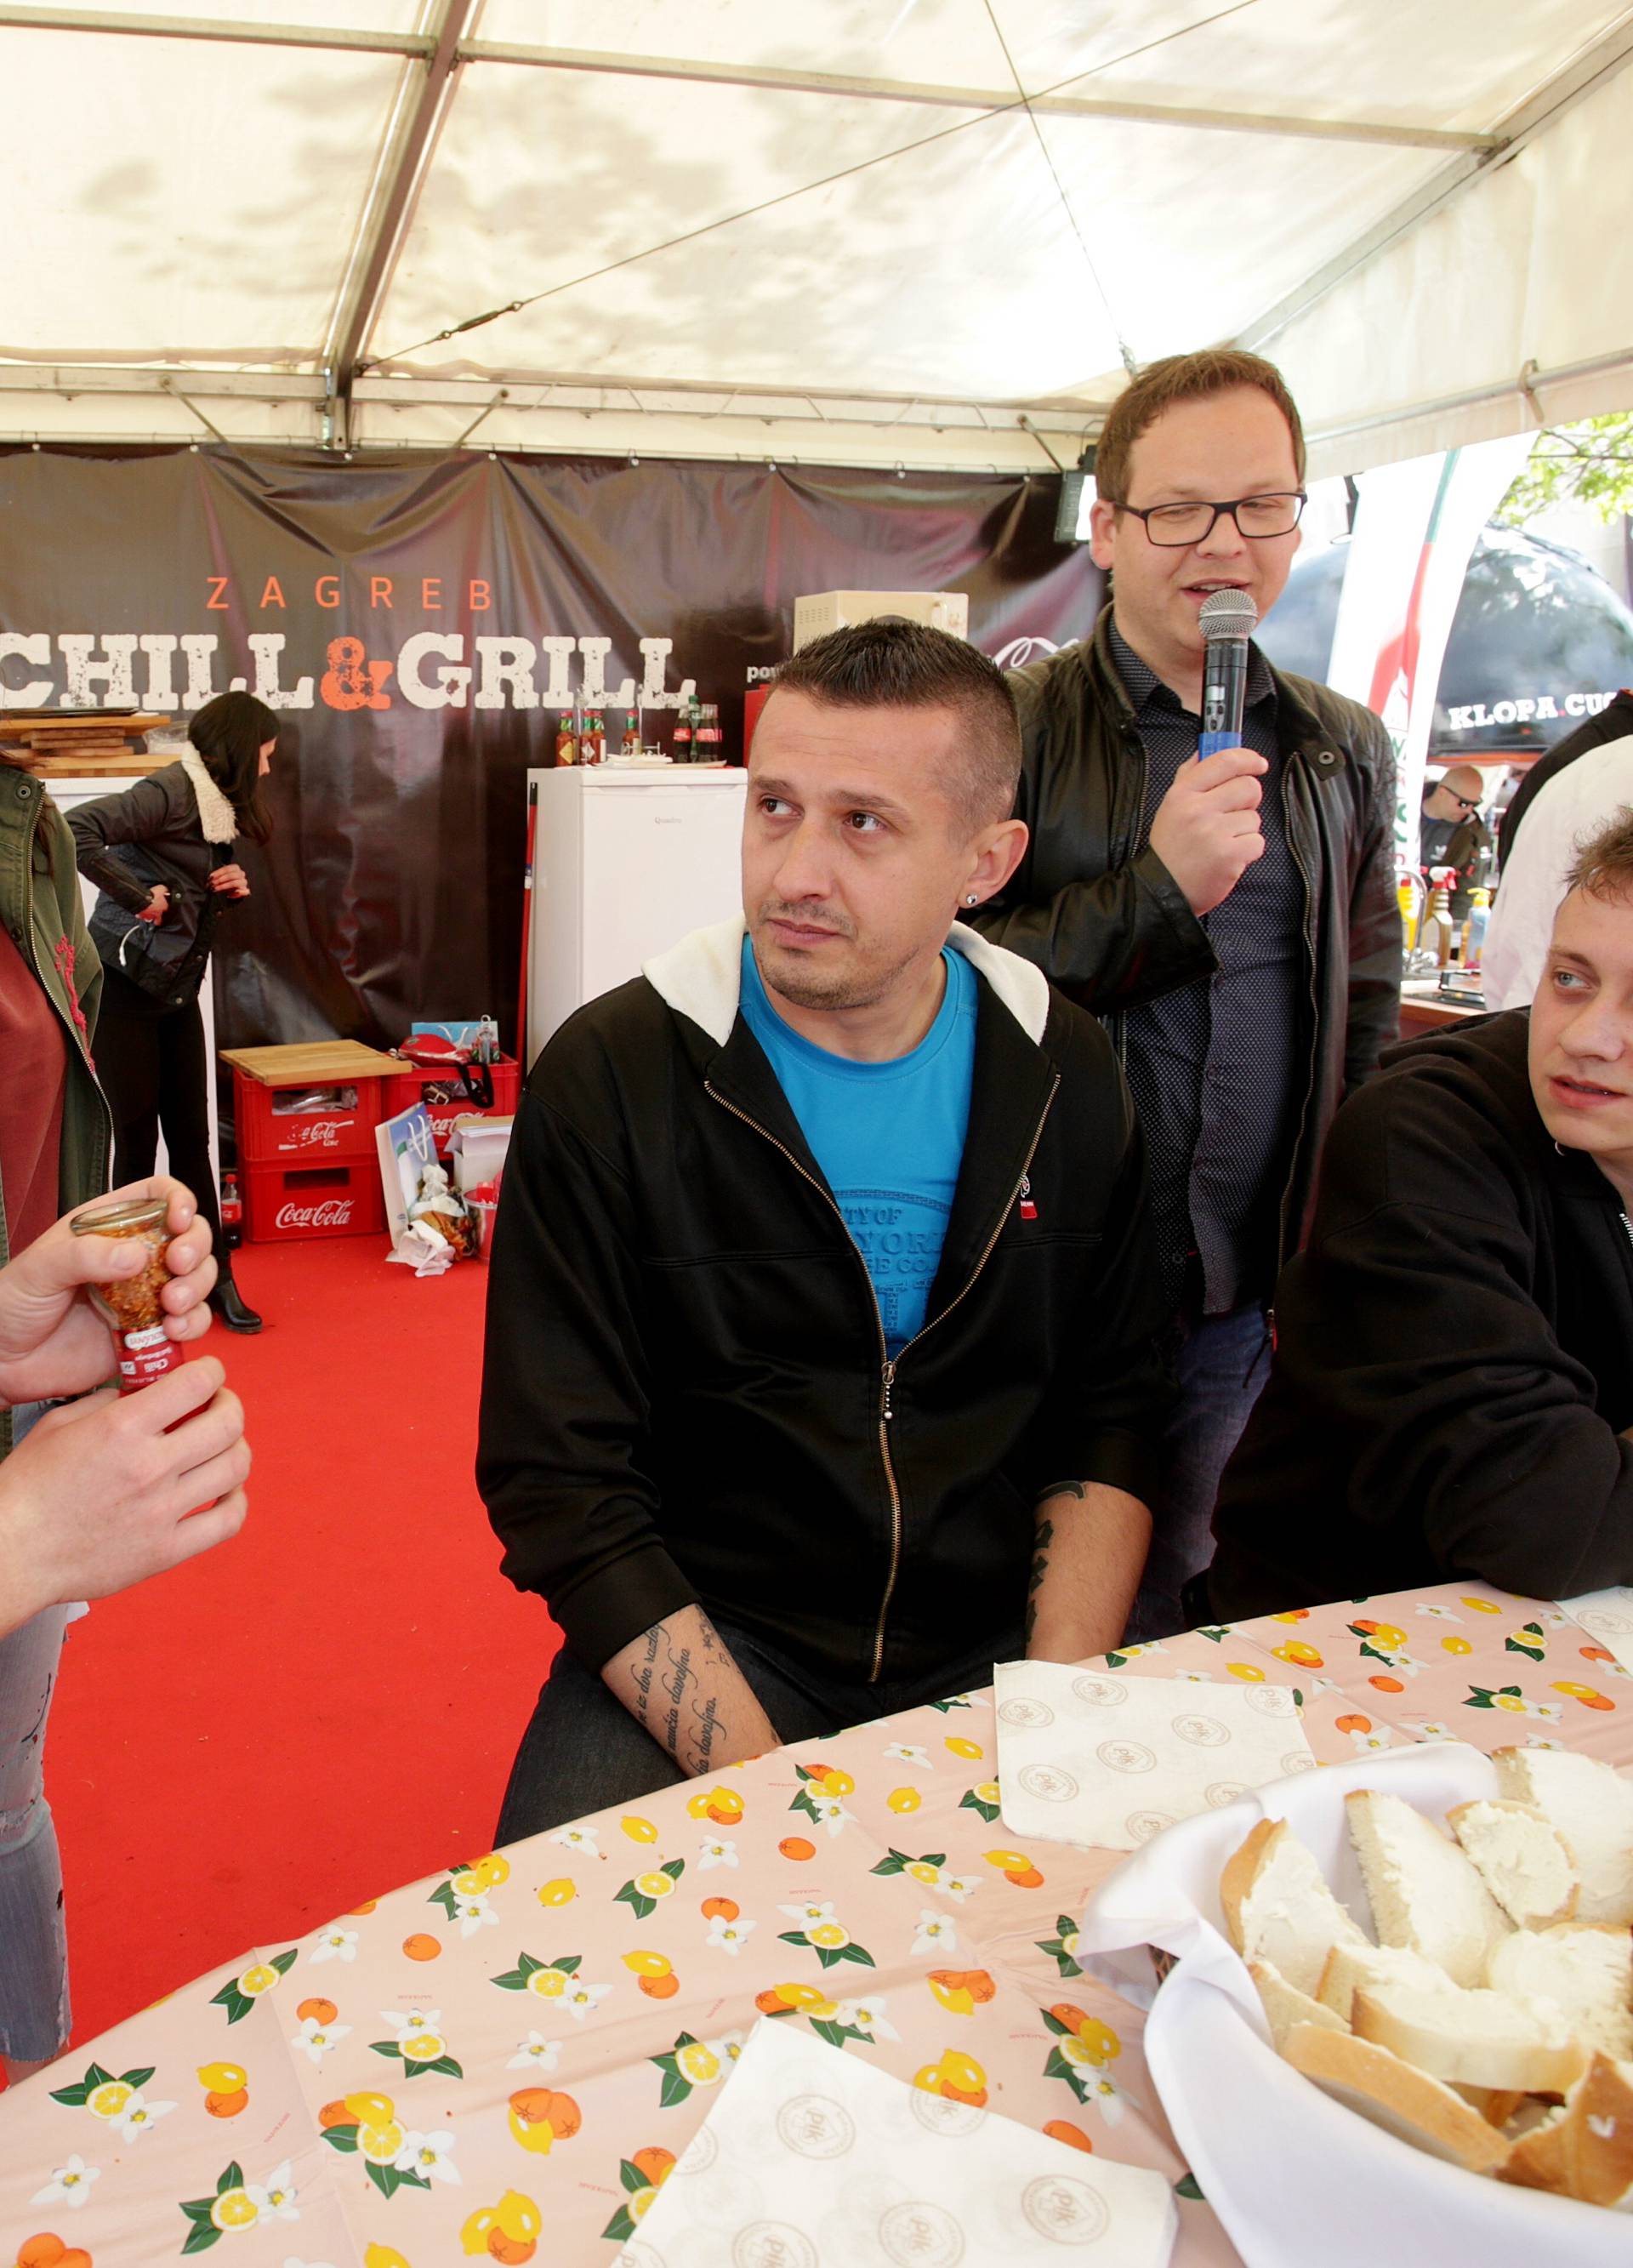 Završio najveći festival klope, cuge i mjuze Zagreb Chill&Grill